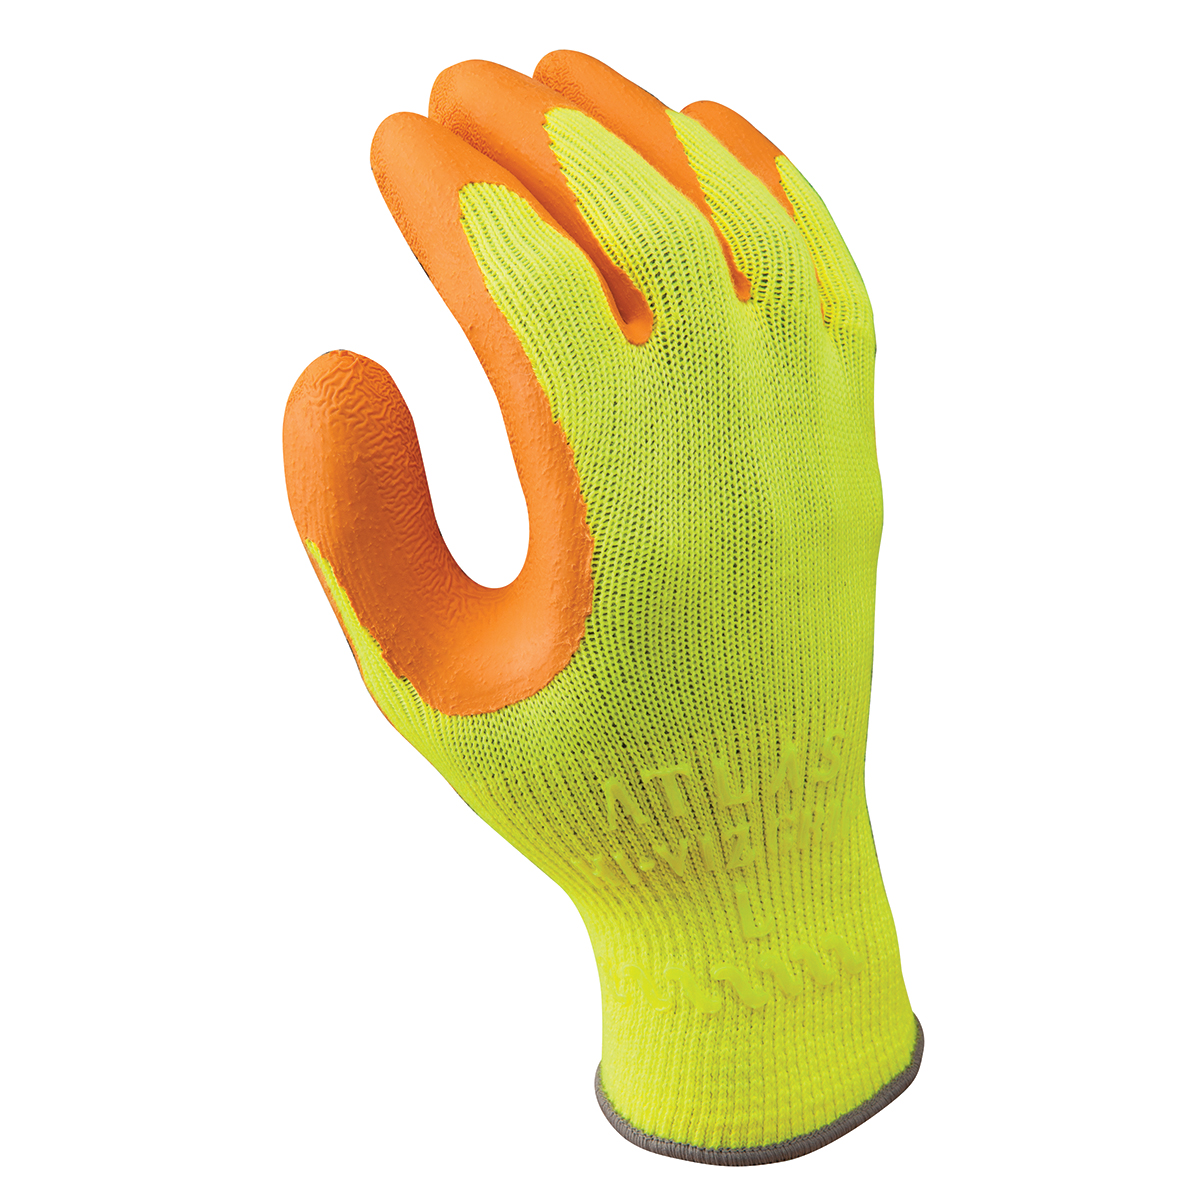 General purpose, palm coated, orange natural rubber, wrinkle finish, ergonomic seamless Hi-Viz bright yellow knitted liner,  extra large - General Purpose